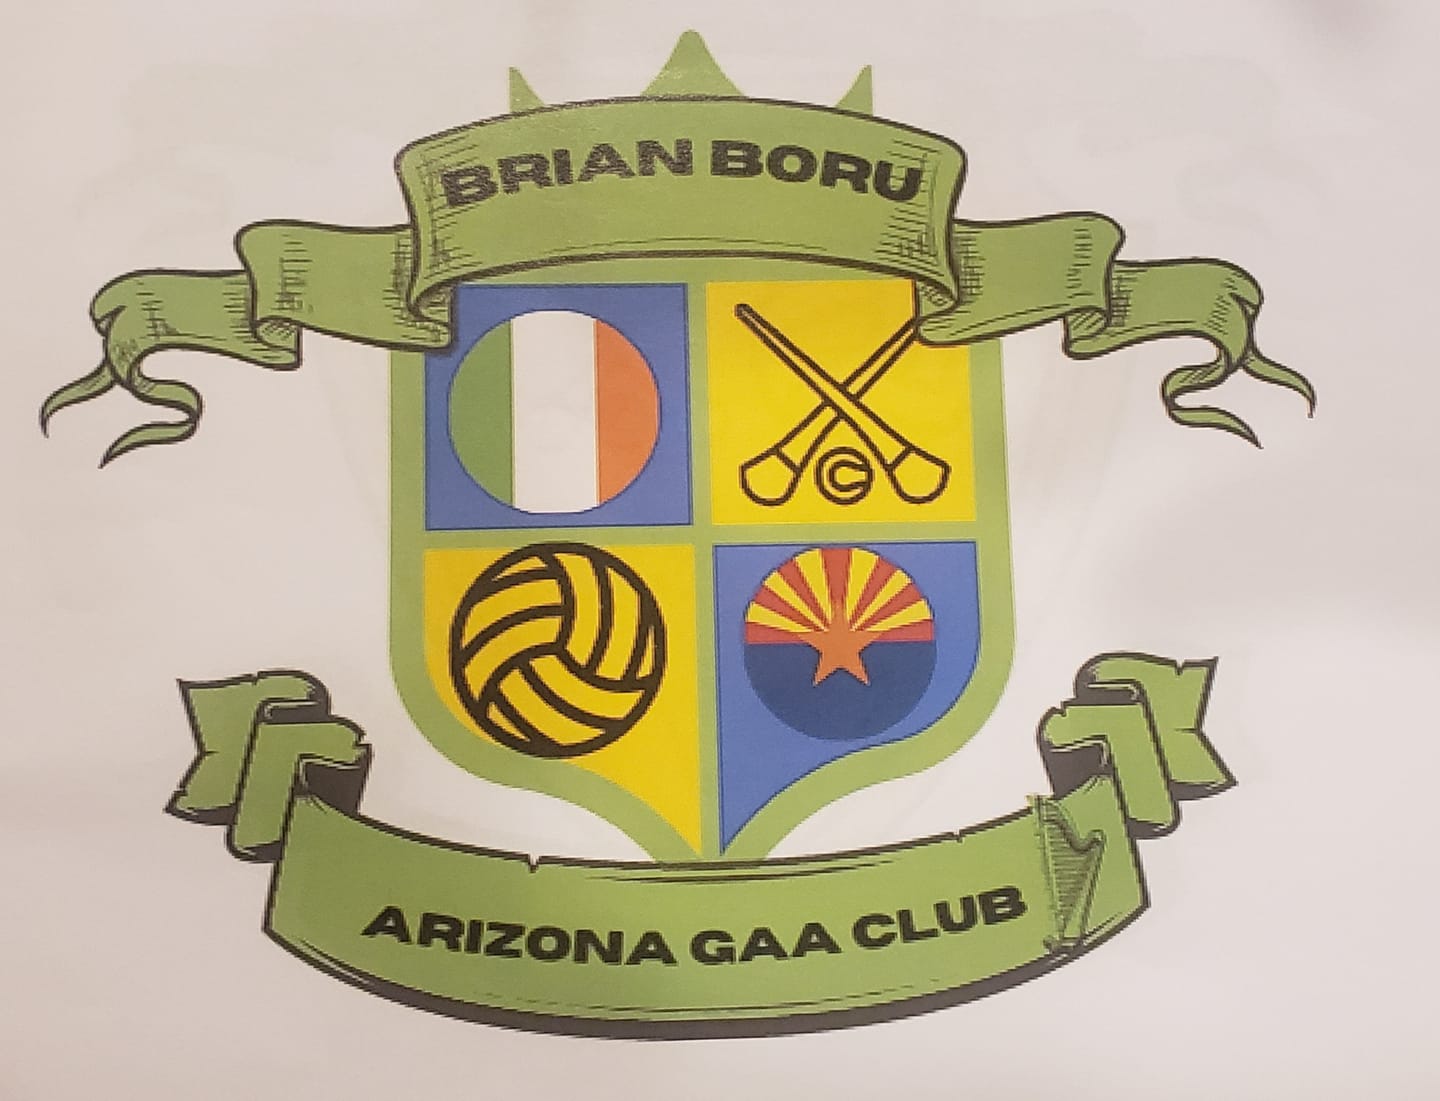 Brian Boru's G.A.A Club Arizona